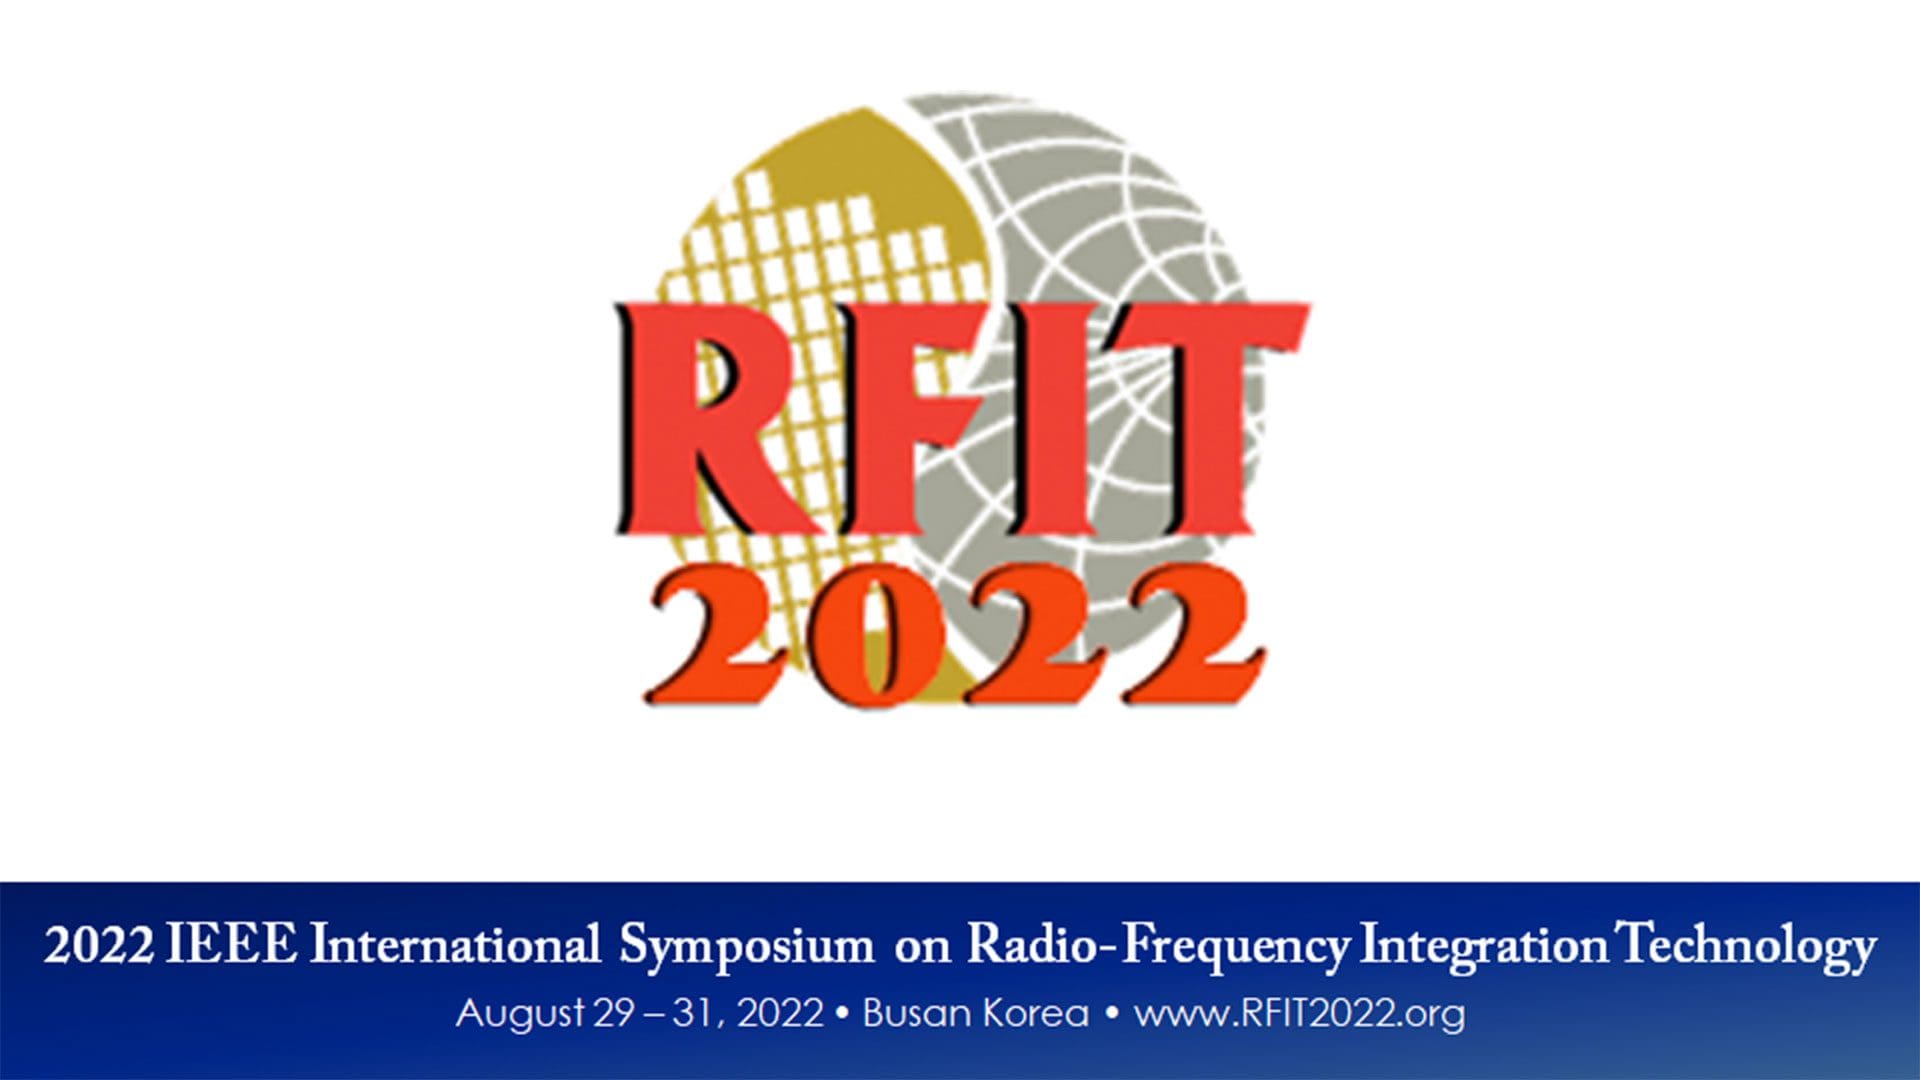 August 29 - RFIT 2022